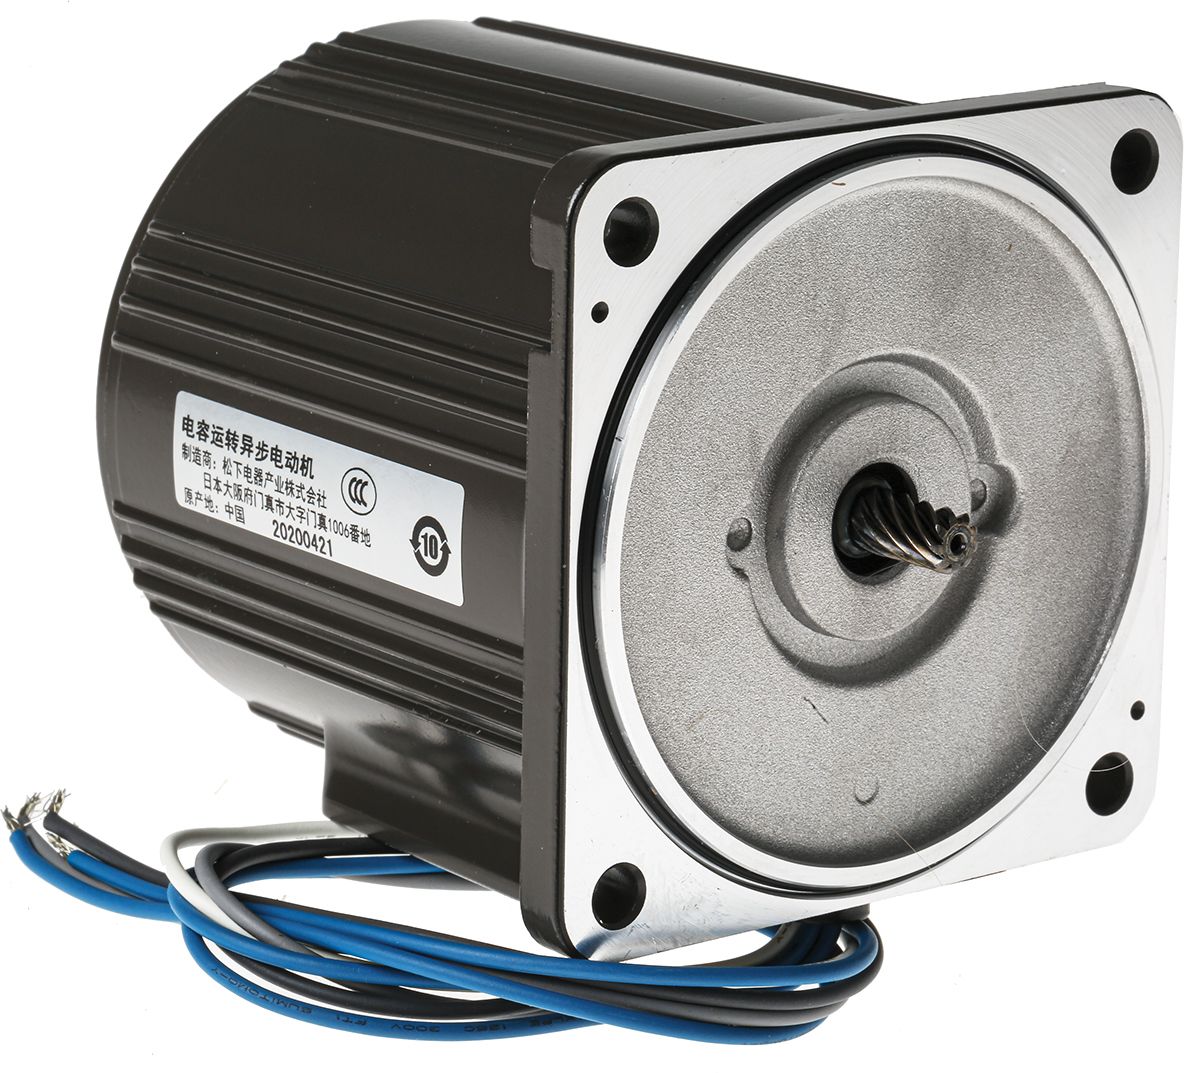 Motor AC de inducción, monofásico, reversible, Panasonic M81, 4 polos, 230 V, 25 W, 1150 rpm a 230 Hz, 0,2 Nm